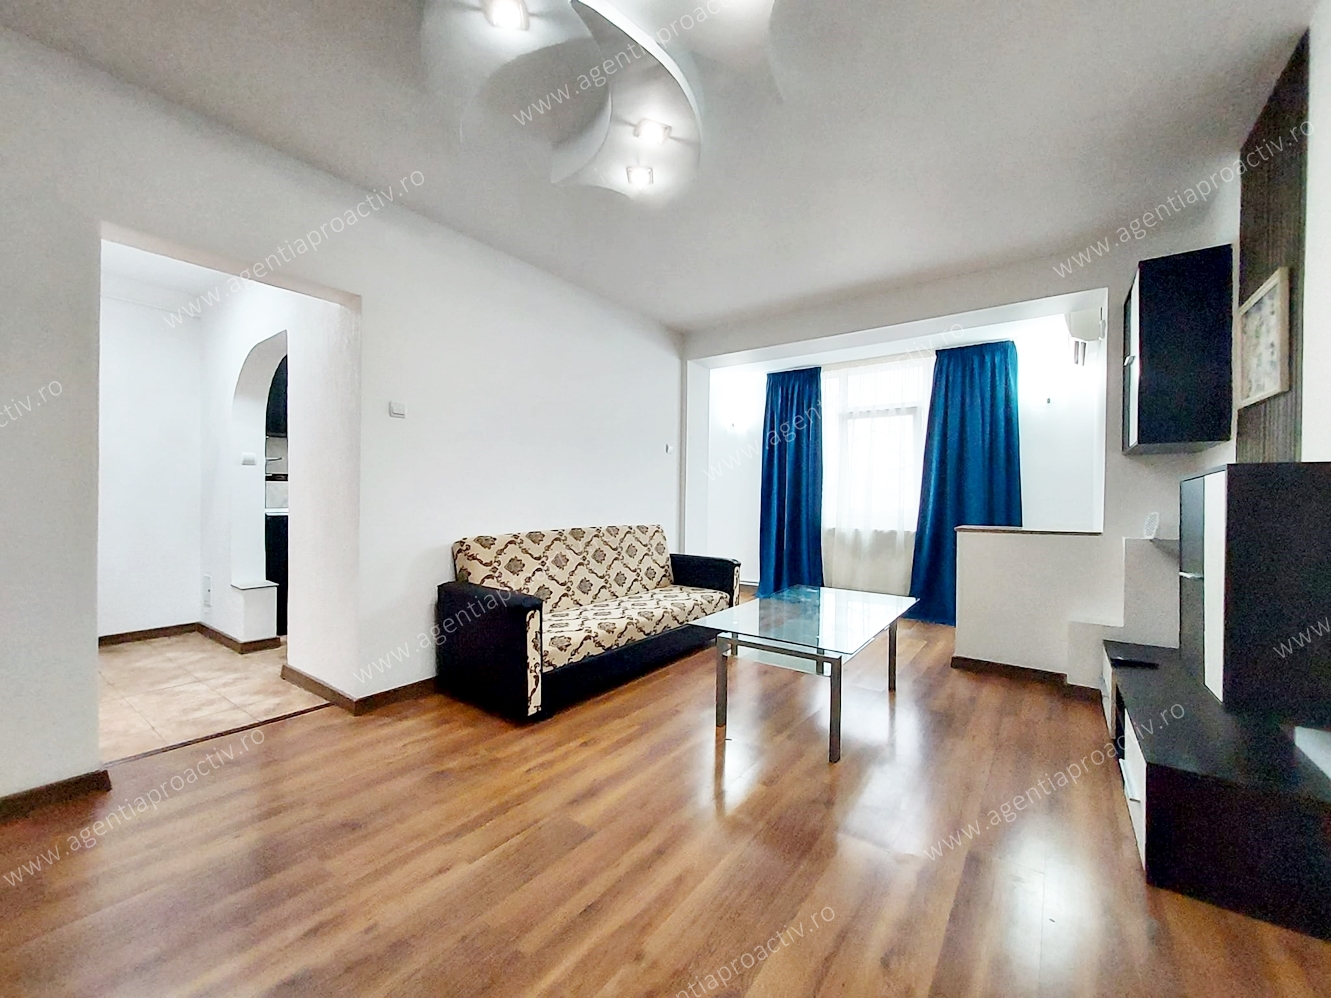 Apartament cu 2 camere, cartier Tiglina 2, ”La cheie!” ST-55,69 mp